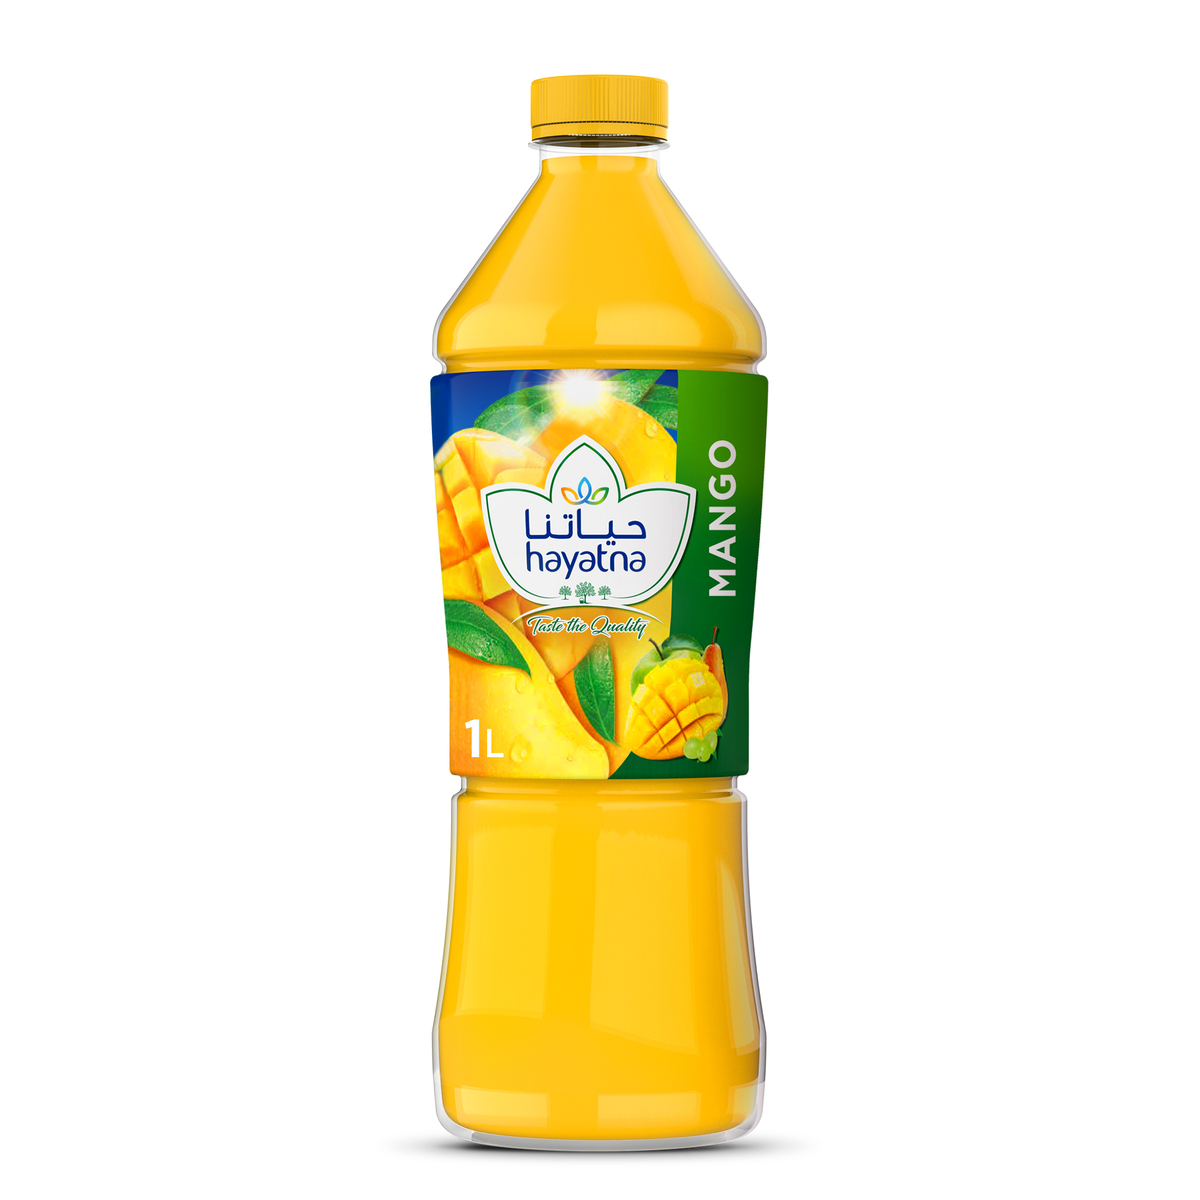 Hayatna No Added Sugar 100% Pure Mango Nectar 1 Litre